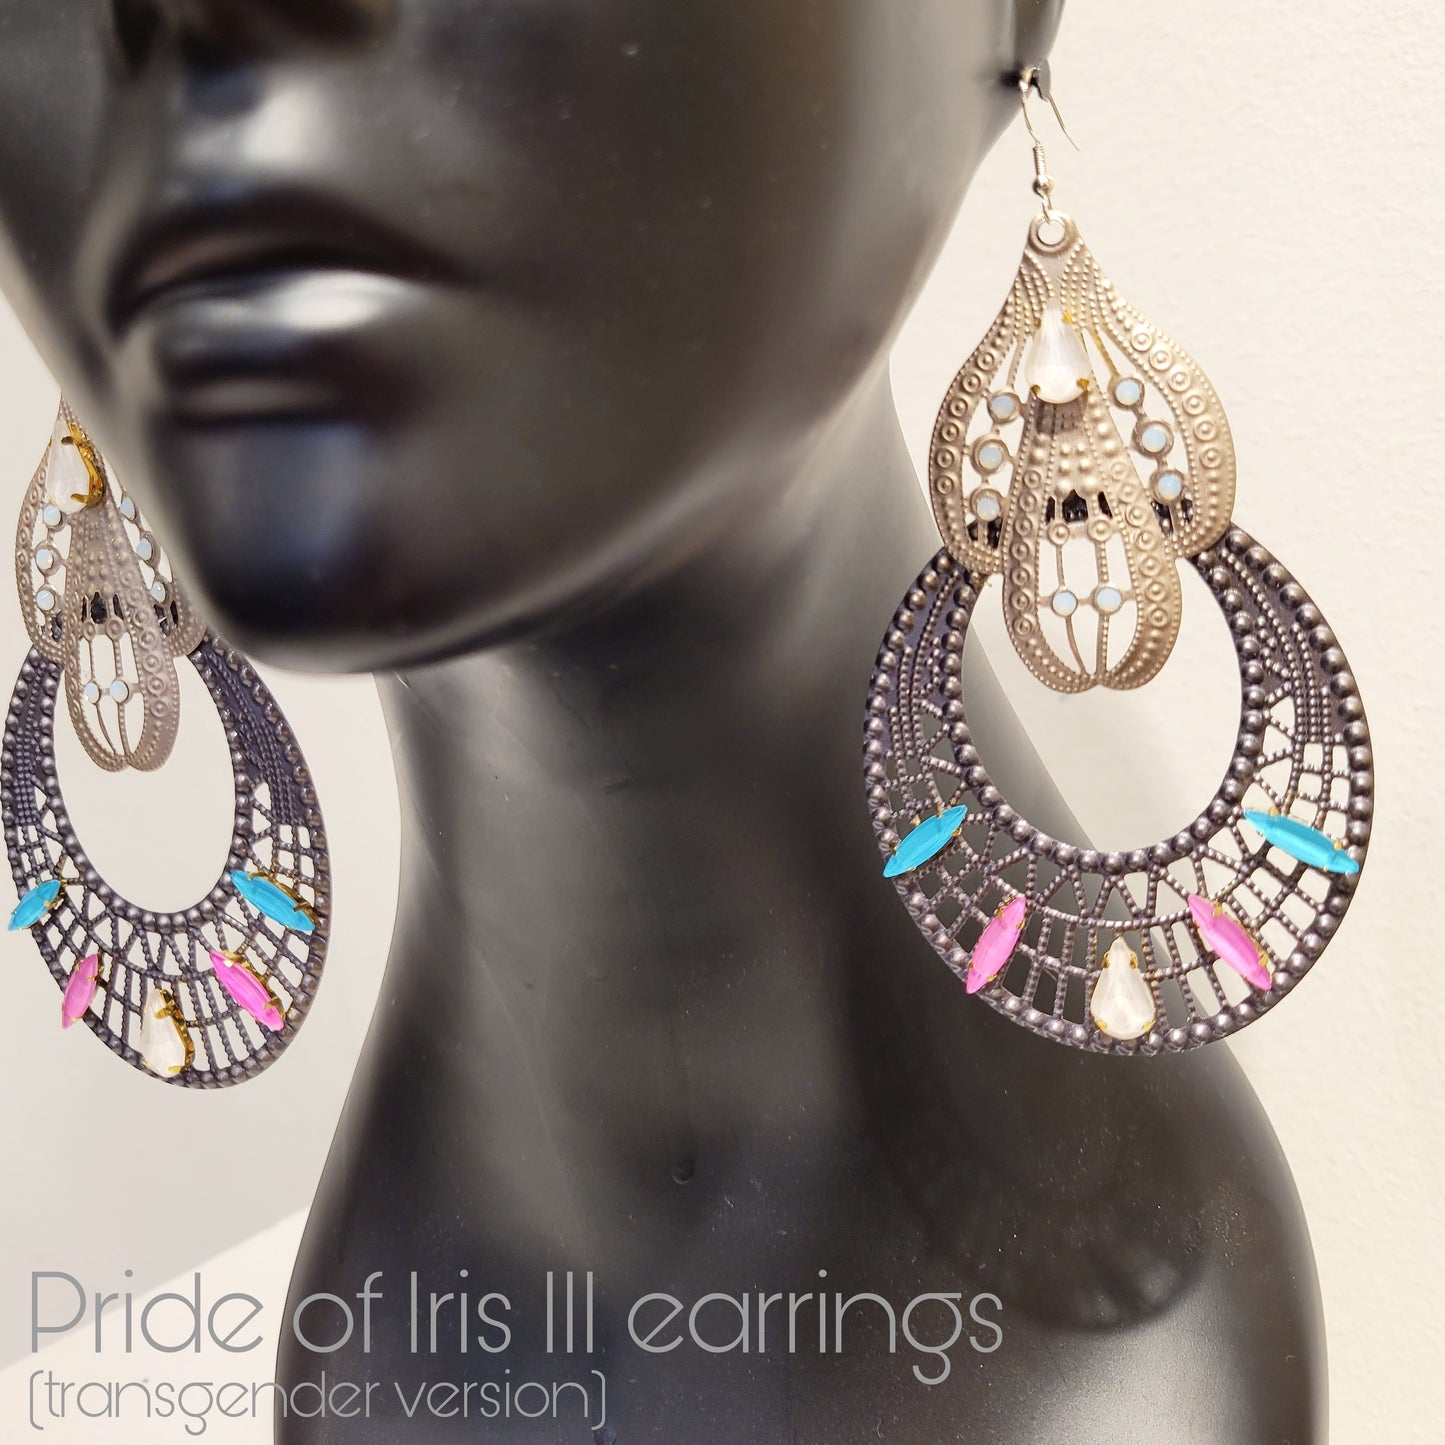 Deusa ex Machina collection: The Pride of Iris earrings